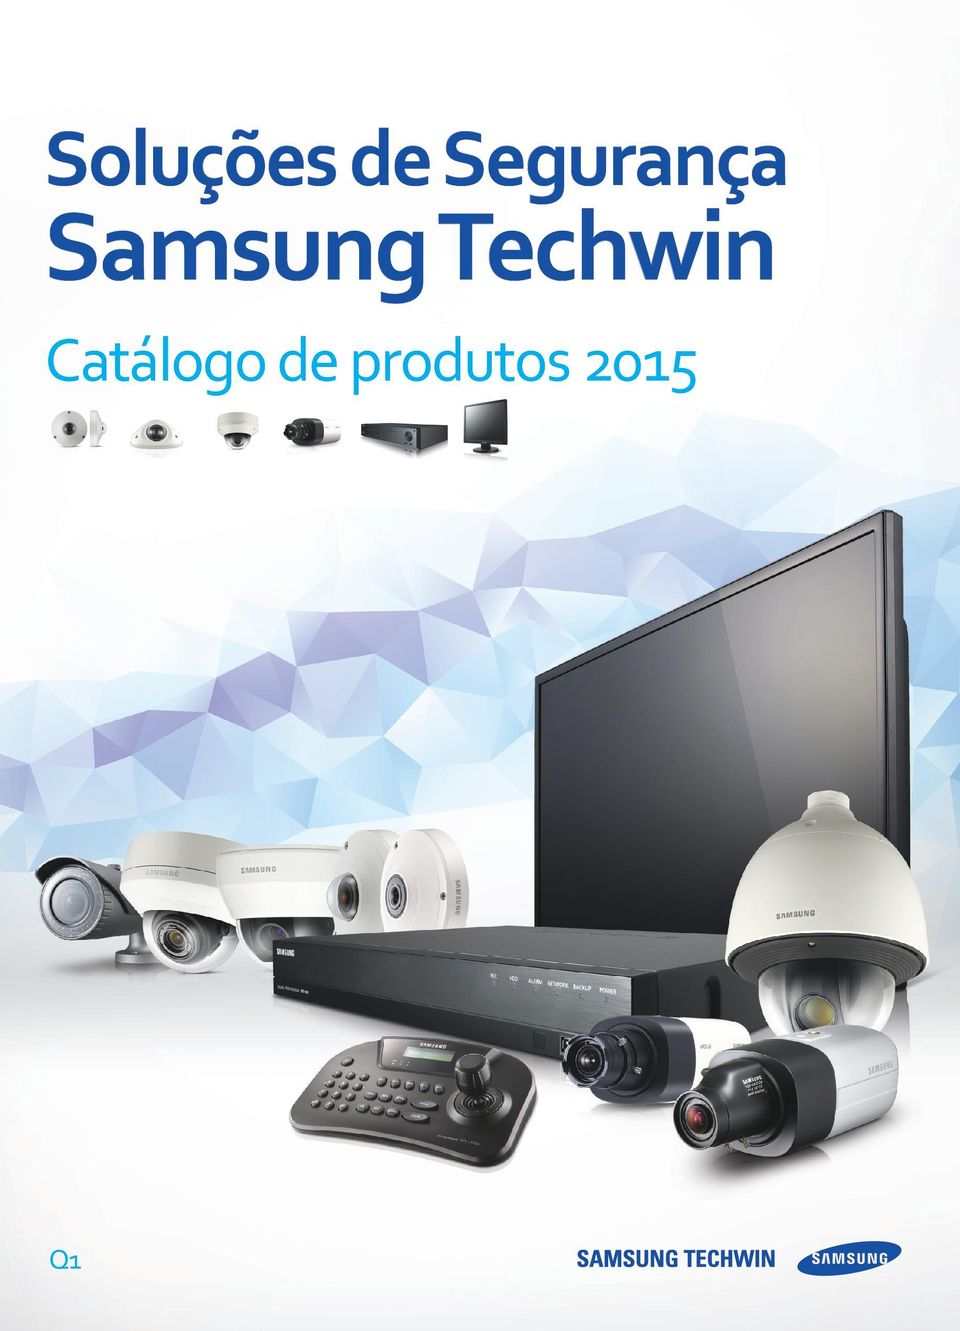 Samsung Techwin